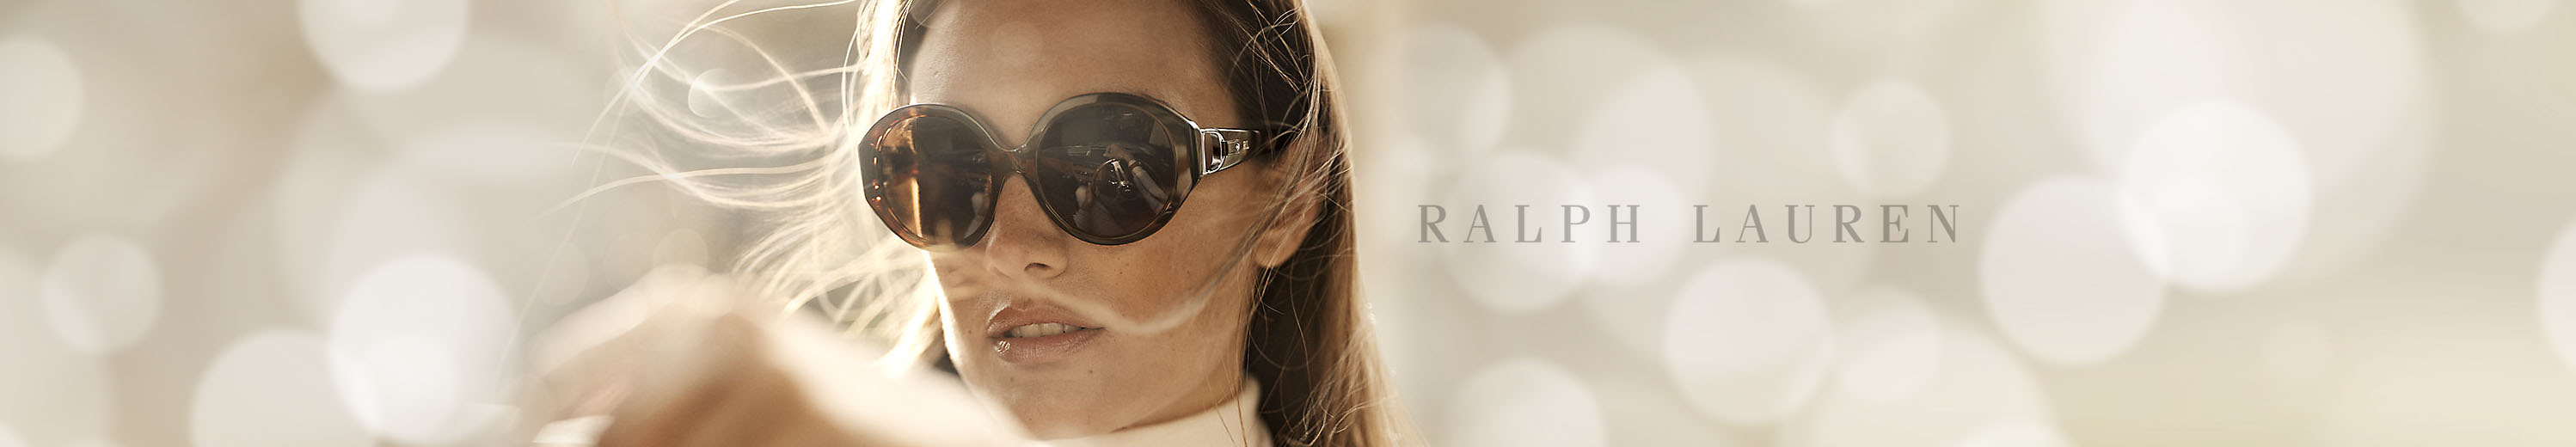 Ralph Lauren Sunglasses for Women